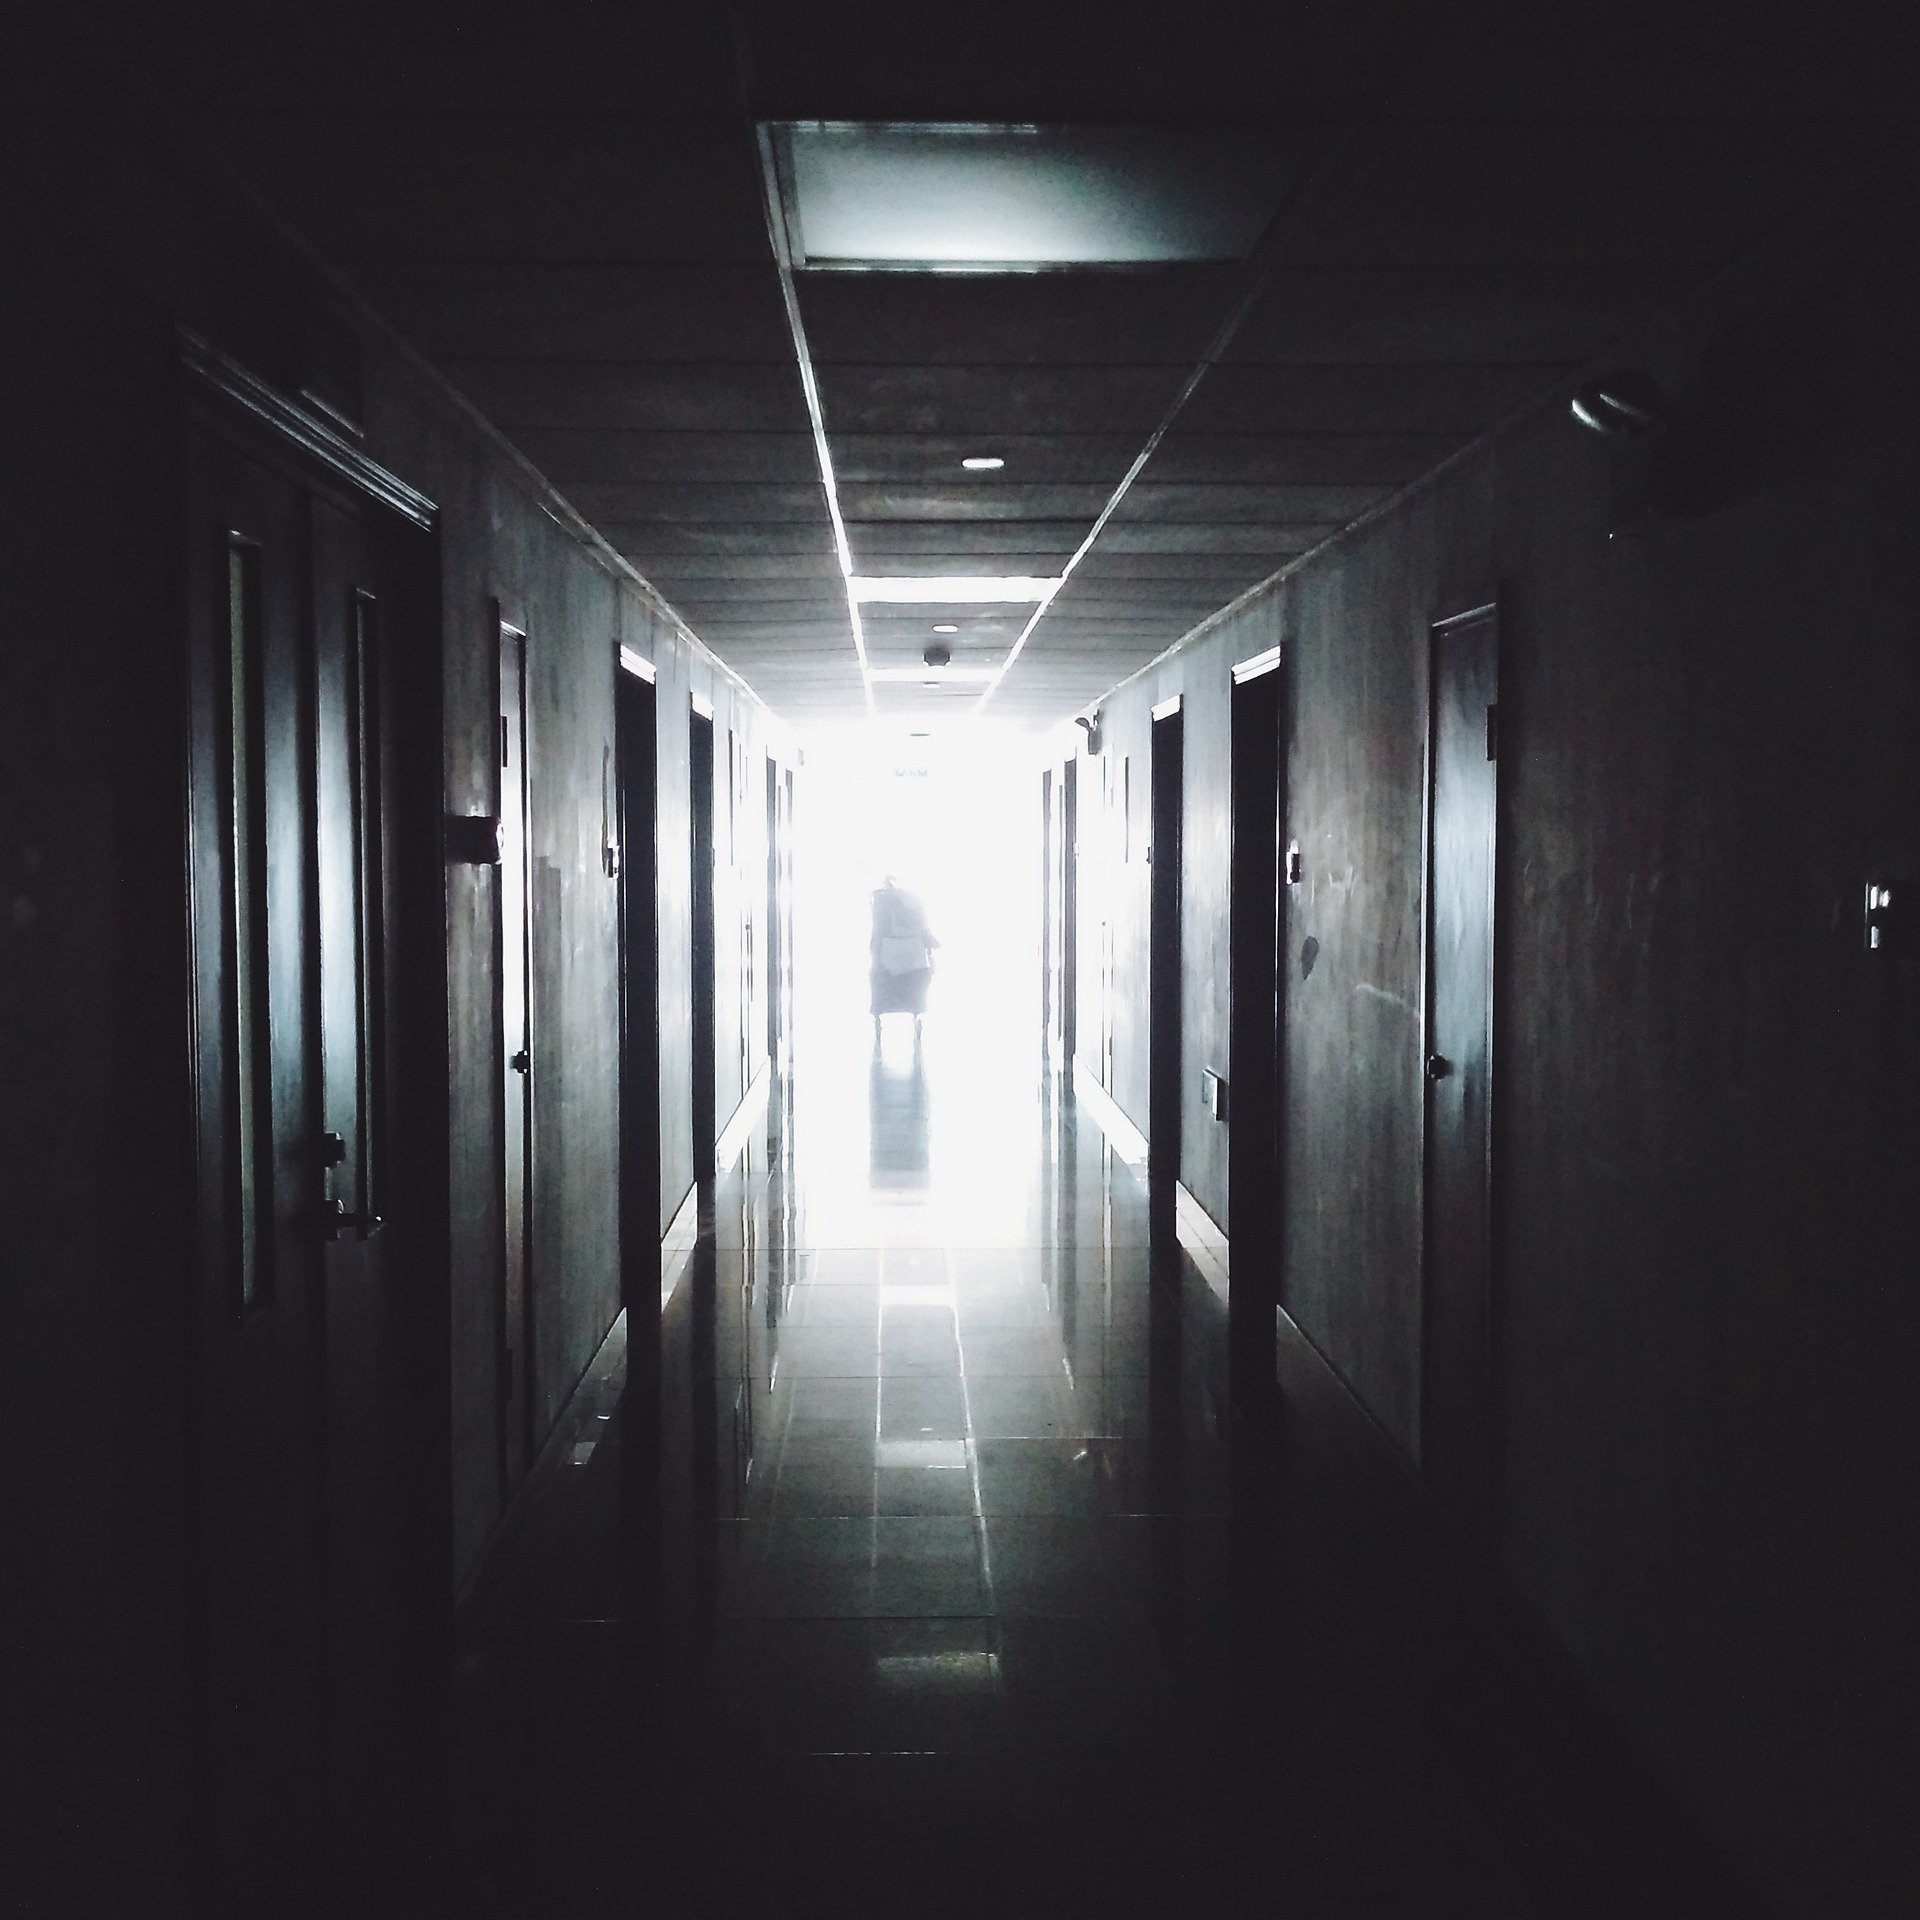 A dark hospital hallway | Source: Pixabay